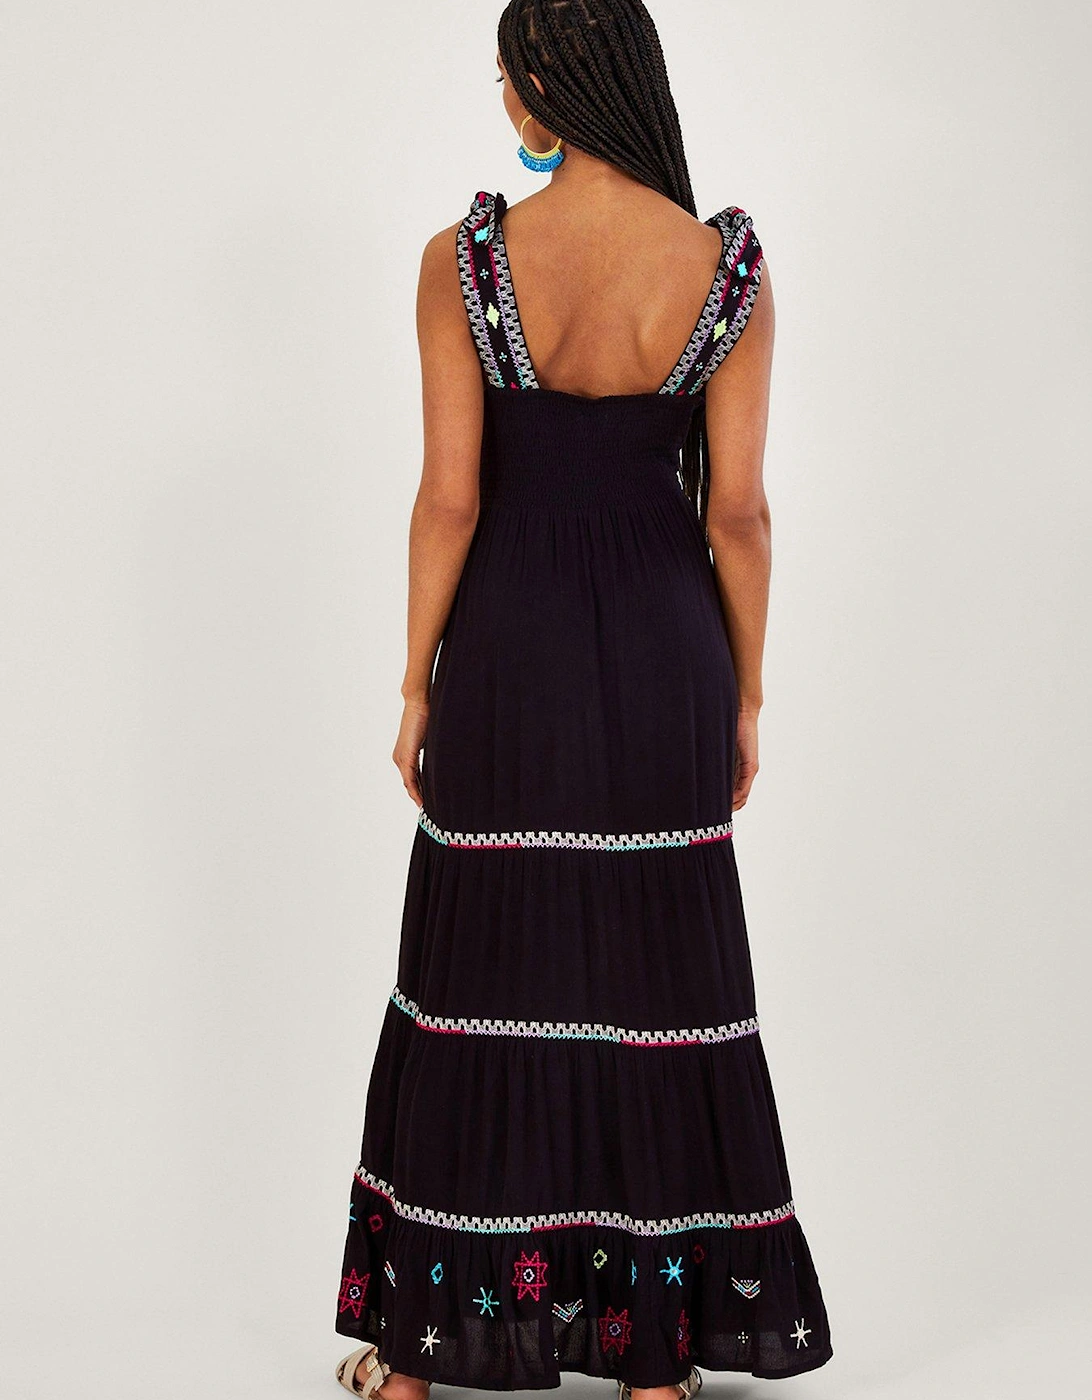 Wide Strap Cami Motif Embroidered Dress - Black